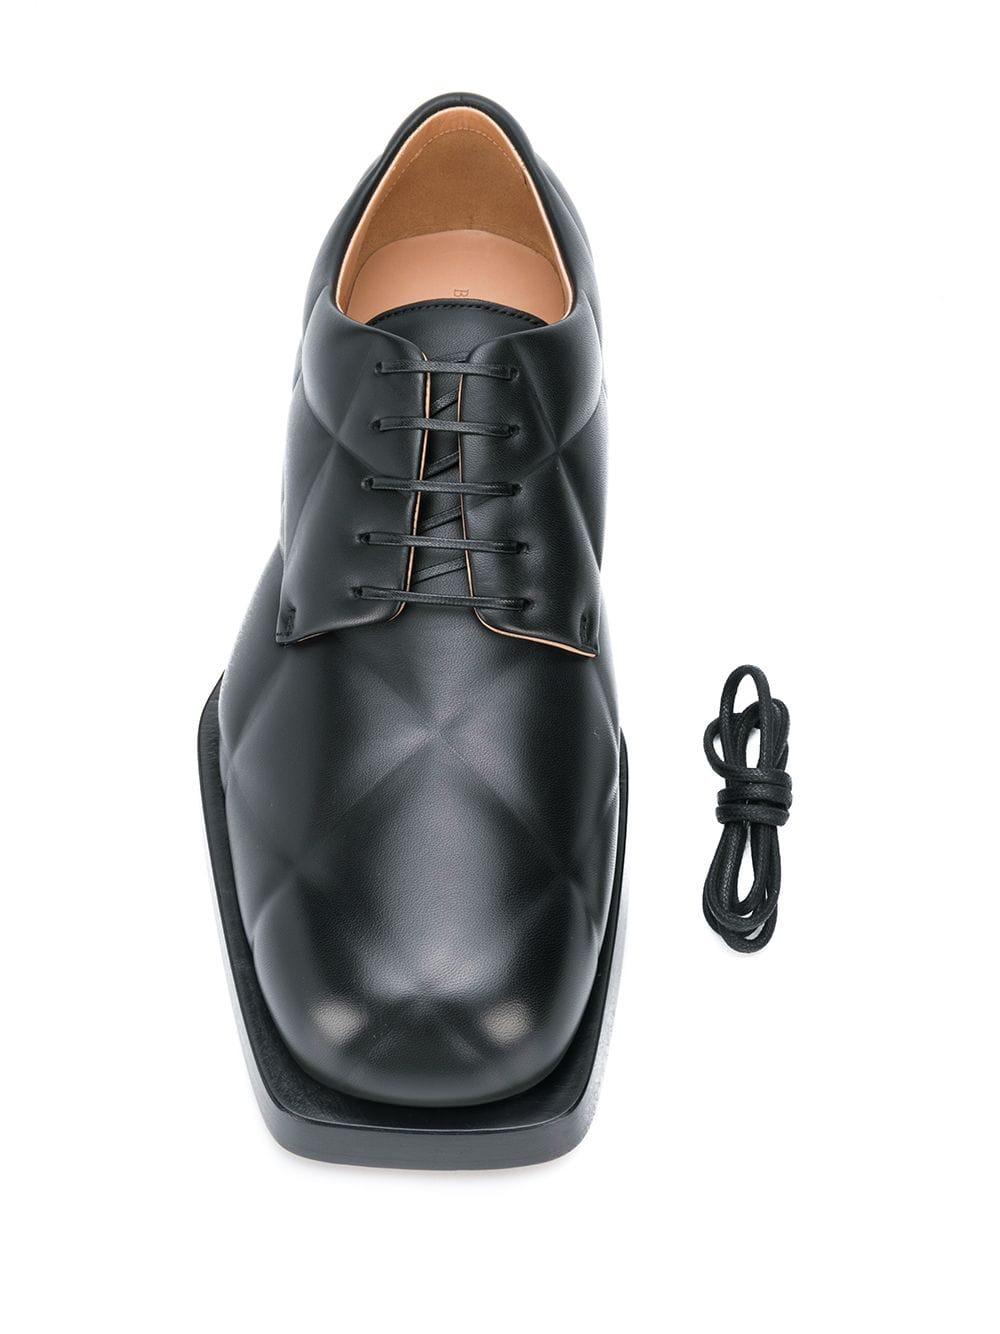 Bottega Veneta Leather Quilted Derby Shoes in Black for Men - Lyst